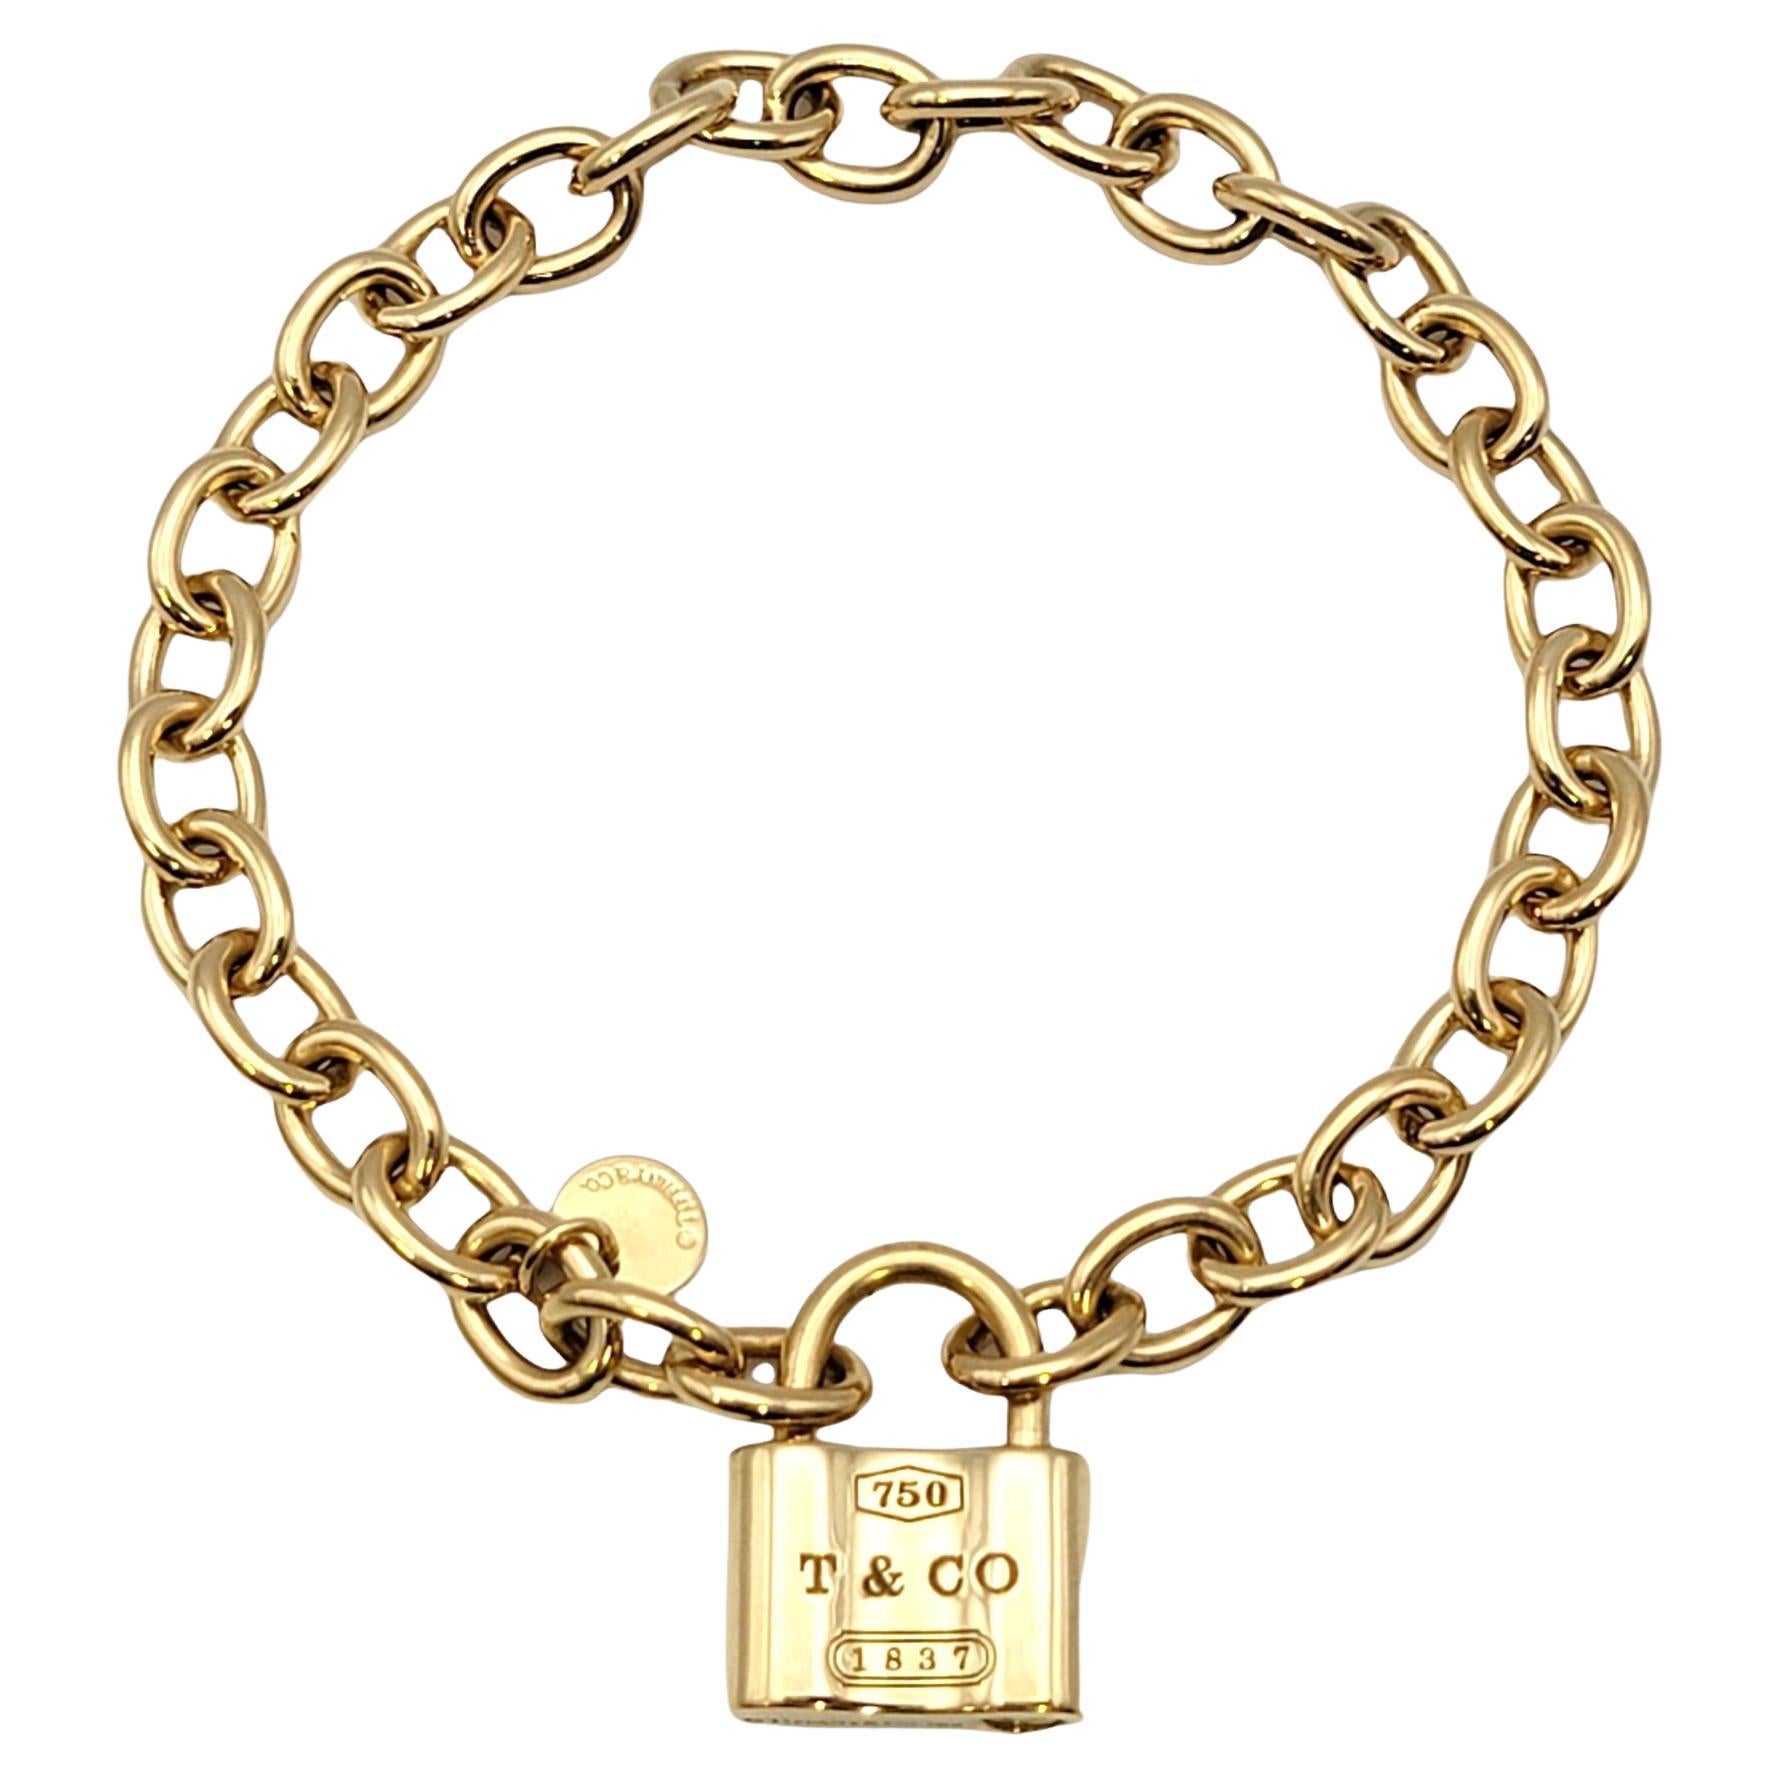 Vintage Tiffany & Co. 1837 Padlock Charm Bracelet